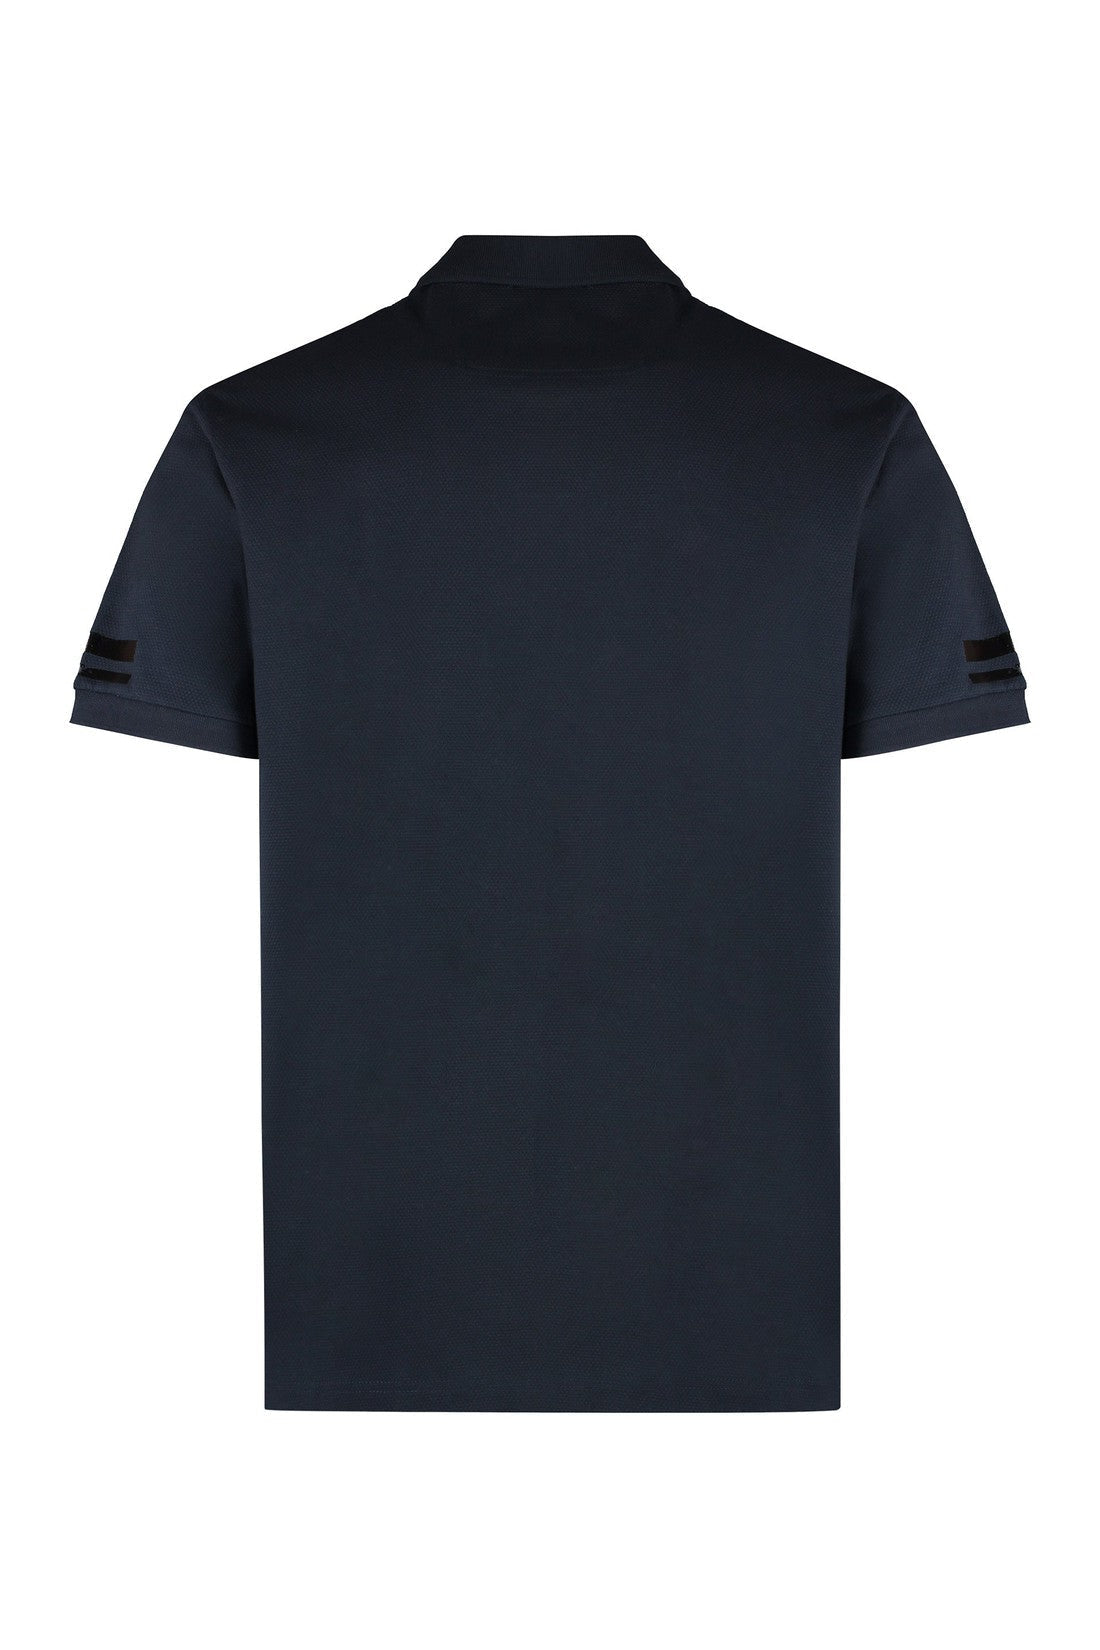 BOSS-OUTLET-SALE-Stretch cotton short sleeve polo shirt-ARCHIVIST